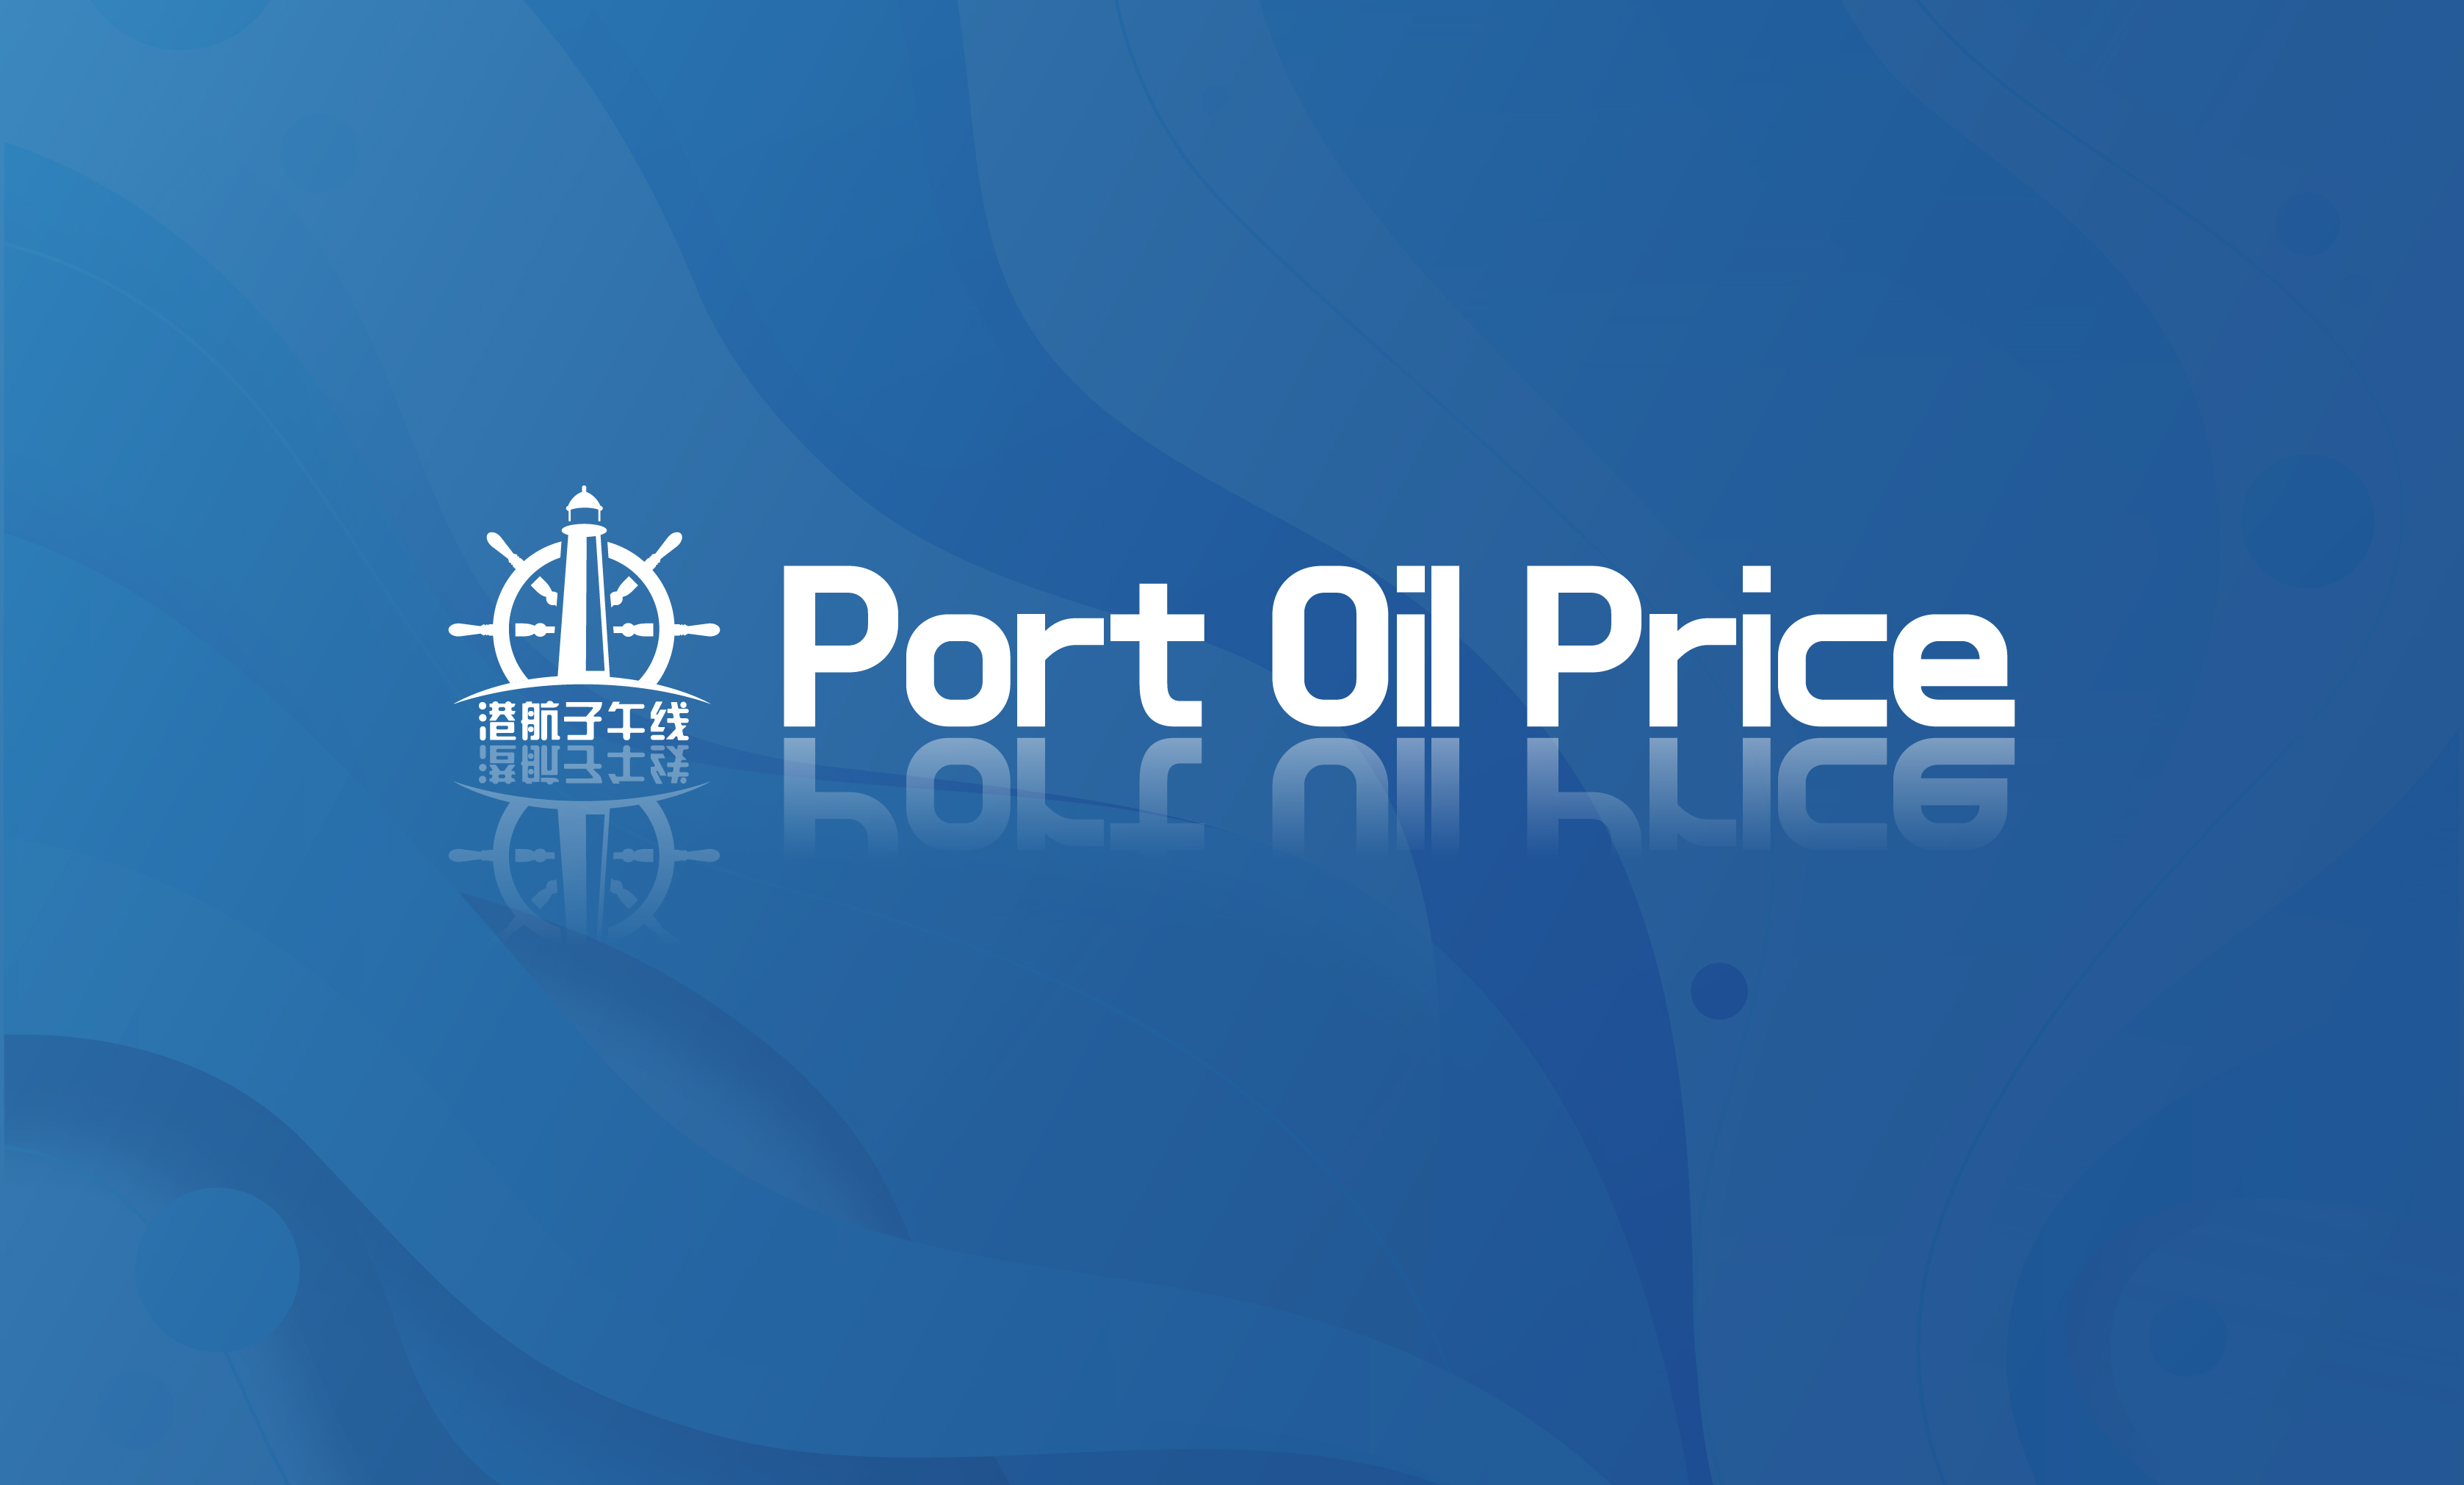 9/22 Oil Price for Global Popular Ports